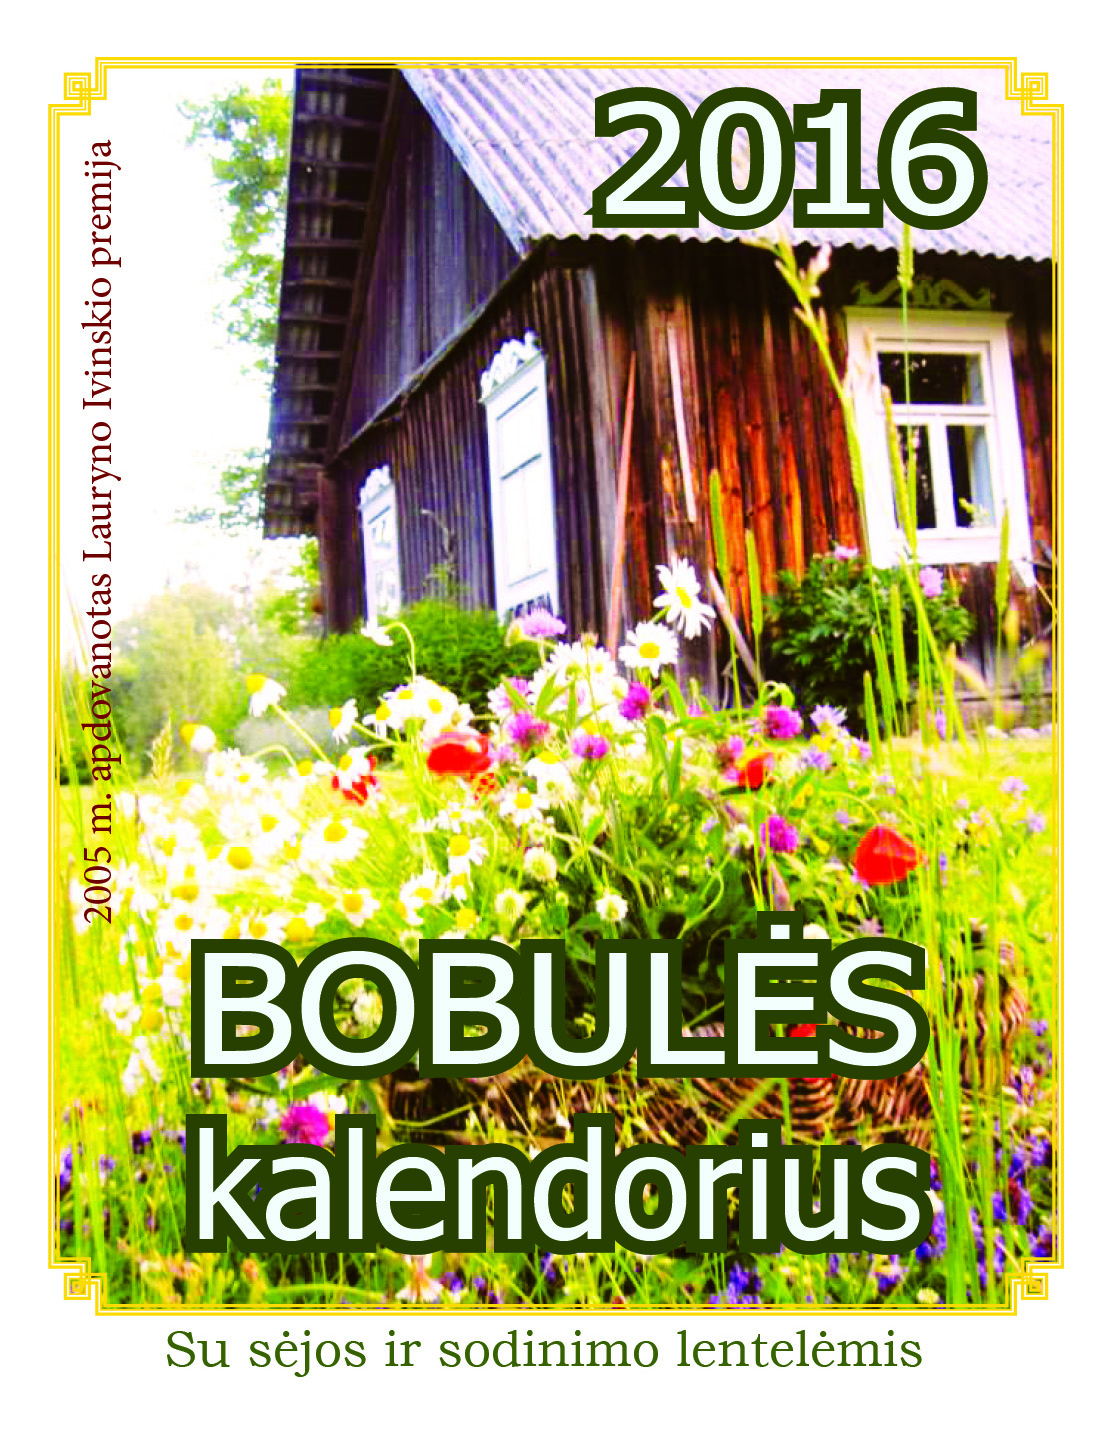 BOBULES KALENDORIUS 2016